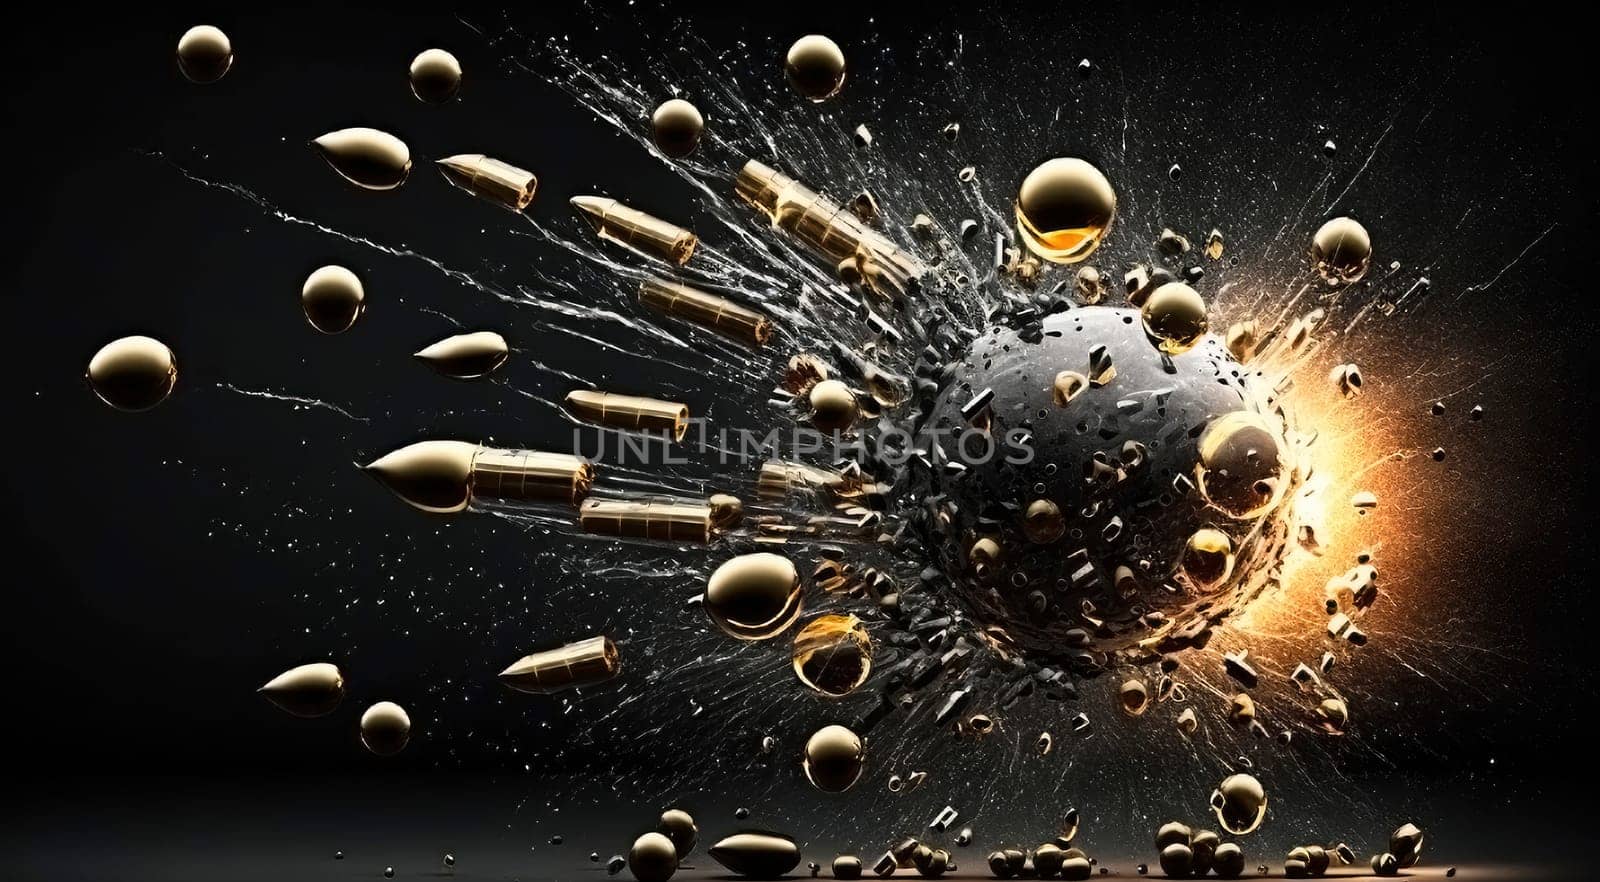 pistol and machine gun bullets. by yanadjana